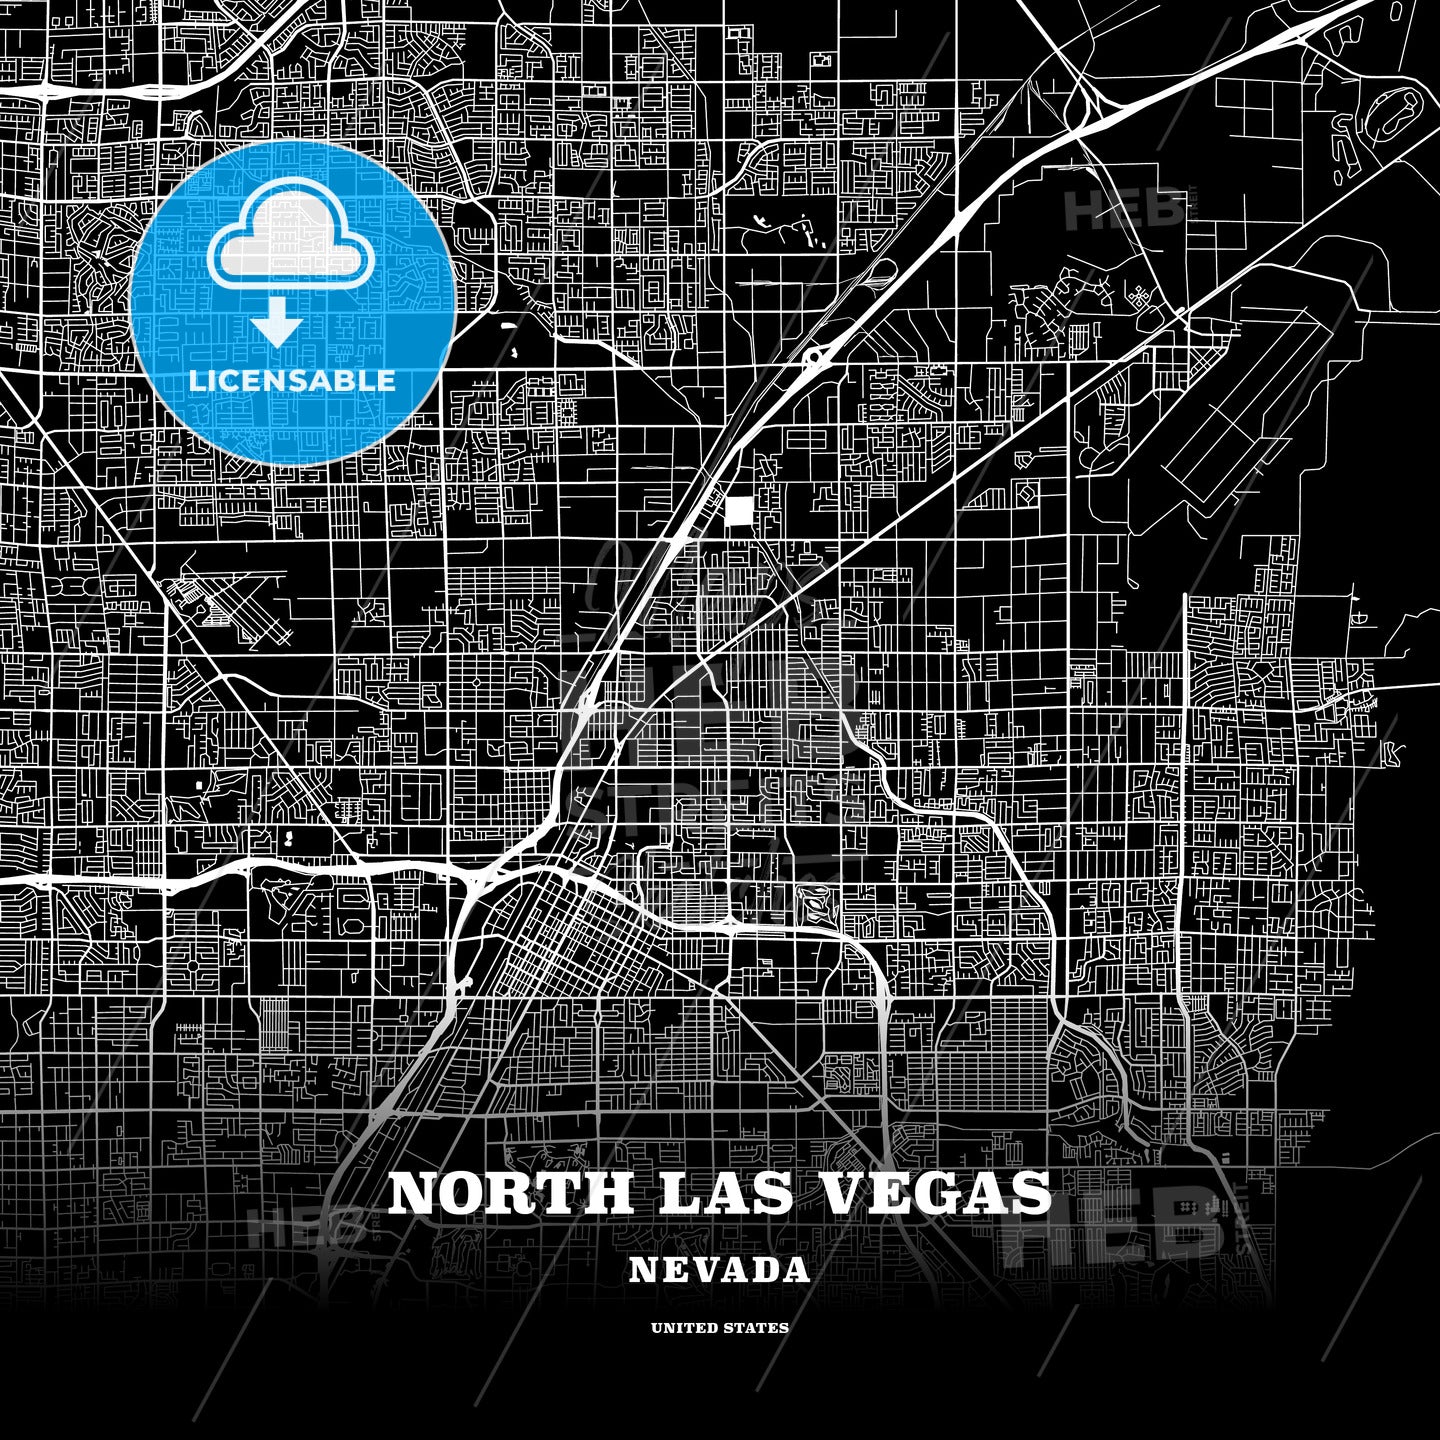 North Las Vegas, Nevada, USA map